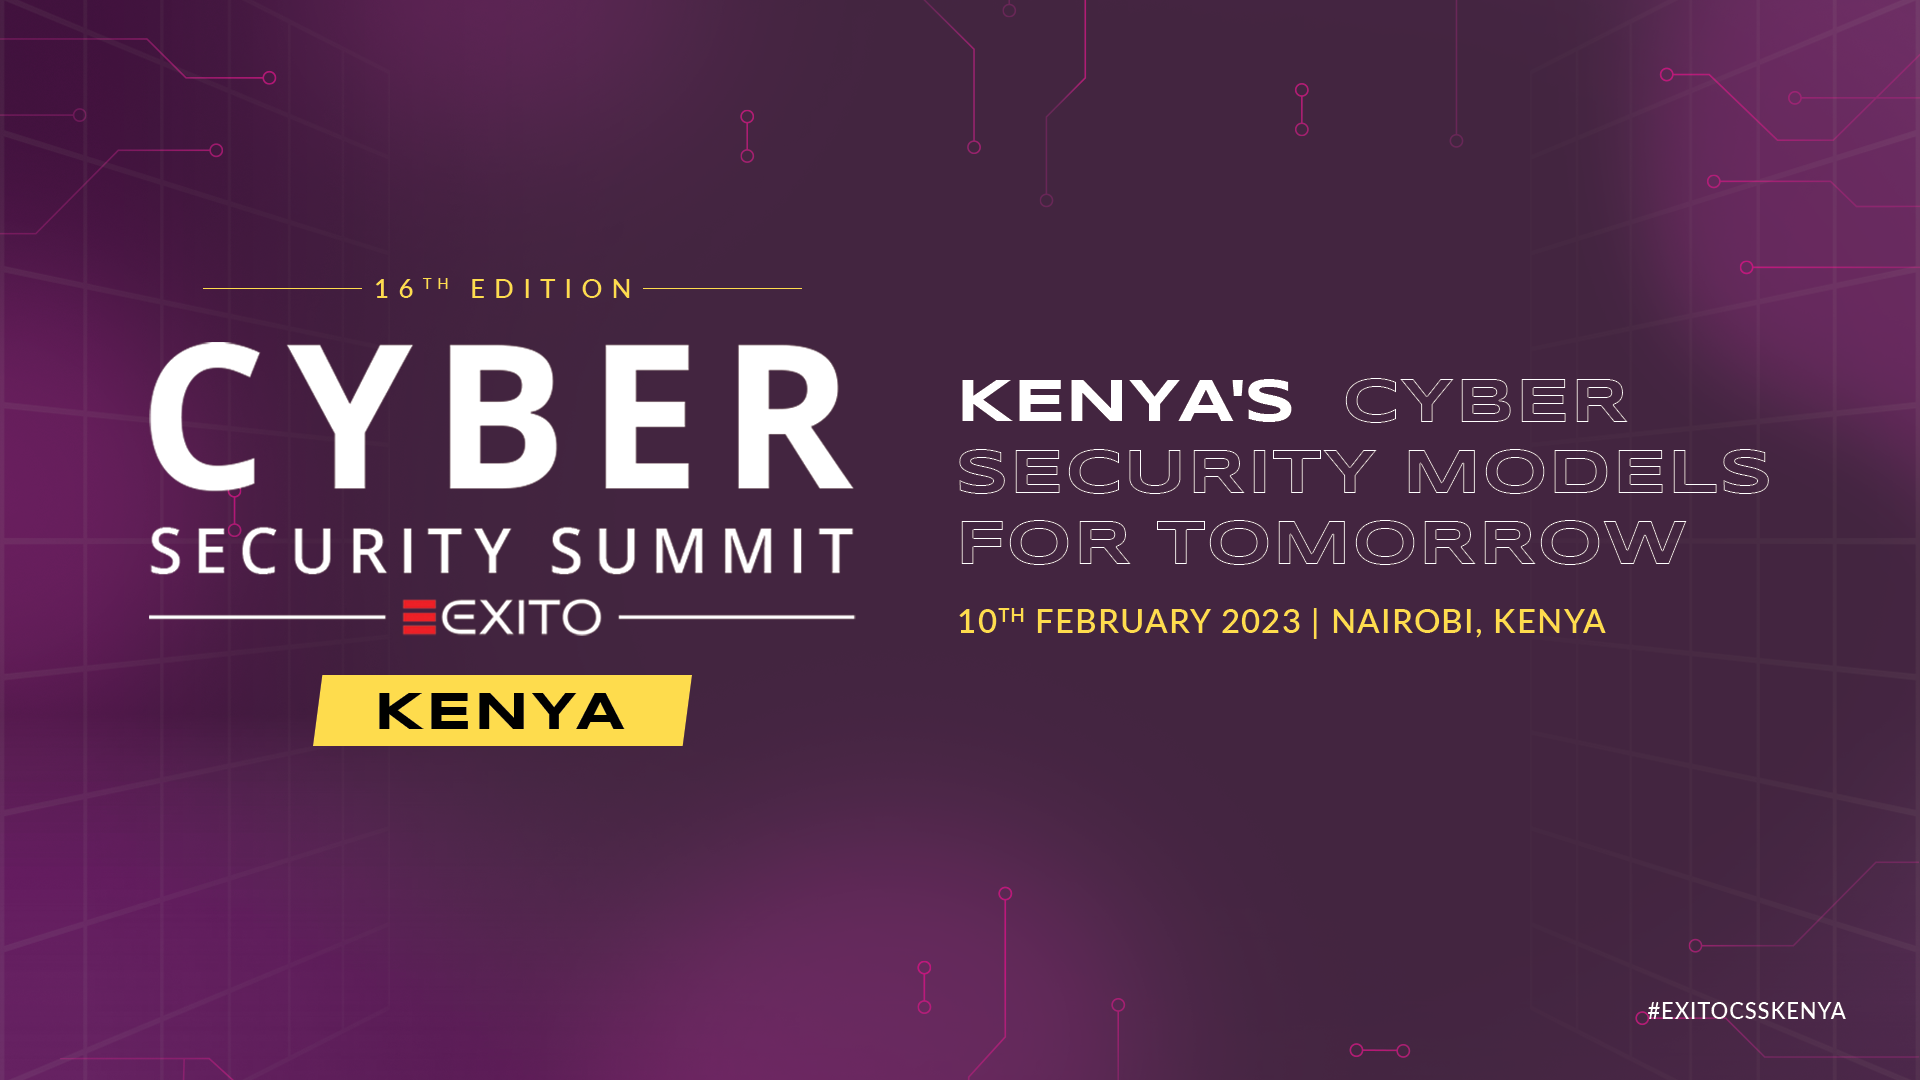 16th Edition - Cyber Security Summit Kenya, Nairobi, Kenya